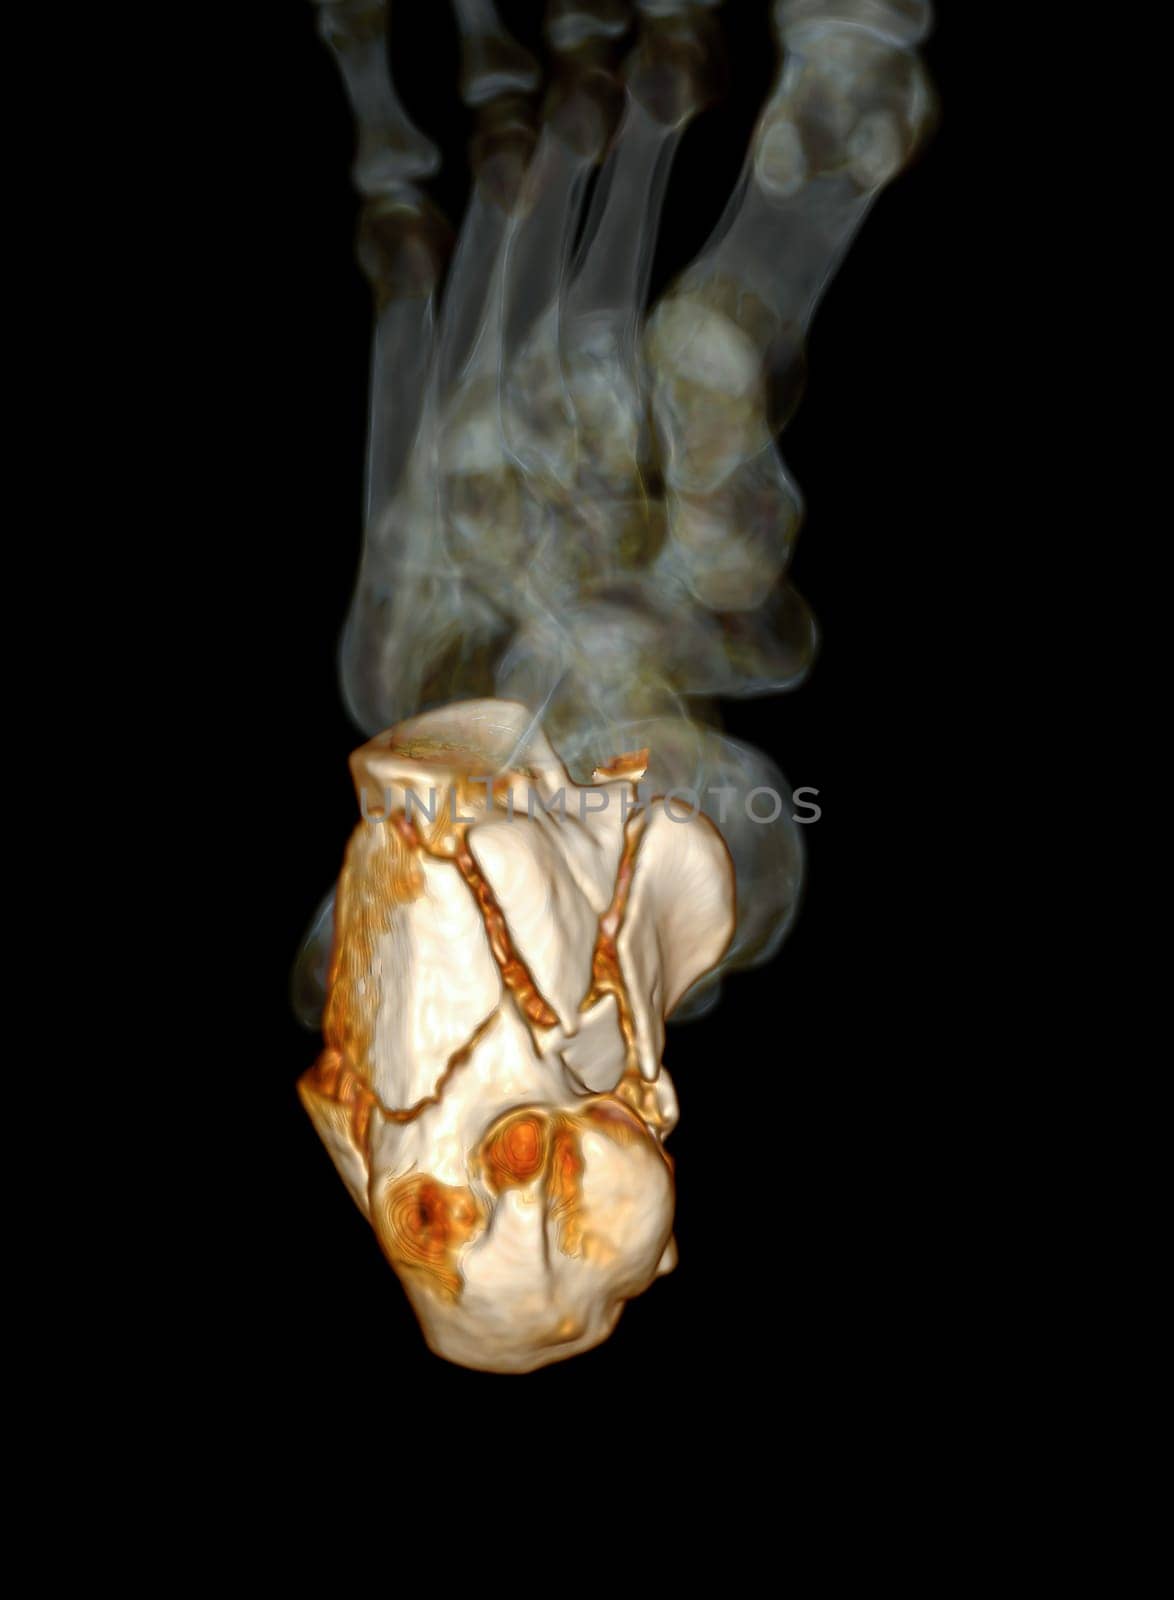 CT Scan ankle joint with  3d rendering of calcaneus bone showing Calcaneus (Heel Bone) Fractures.